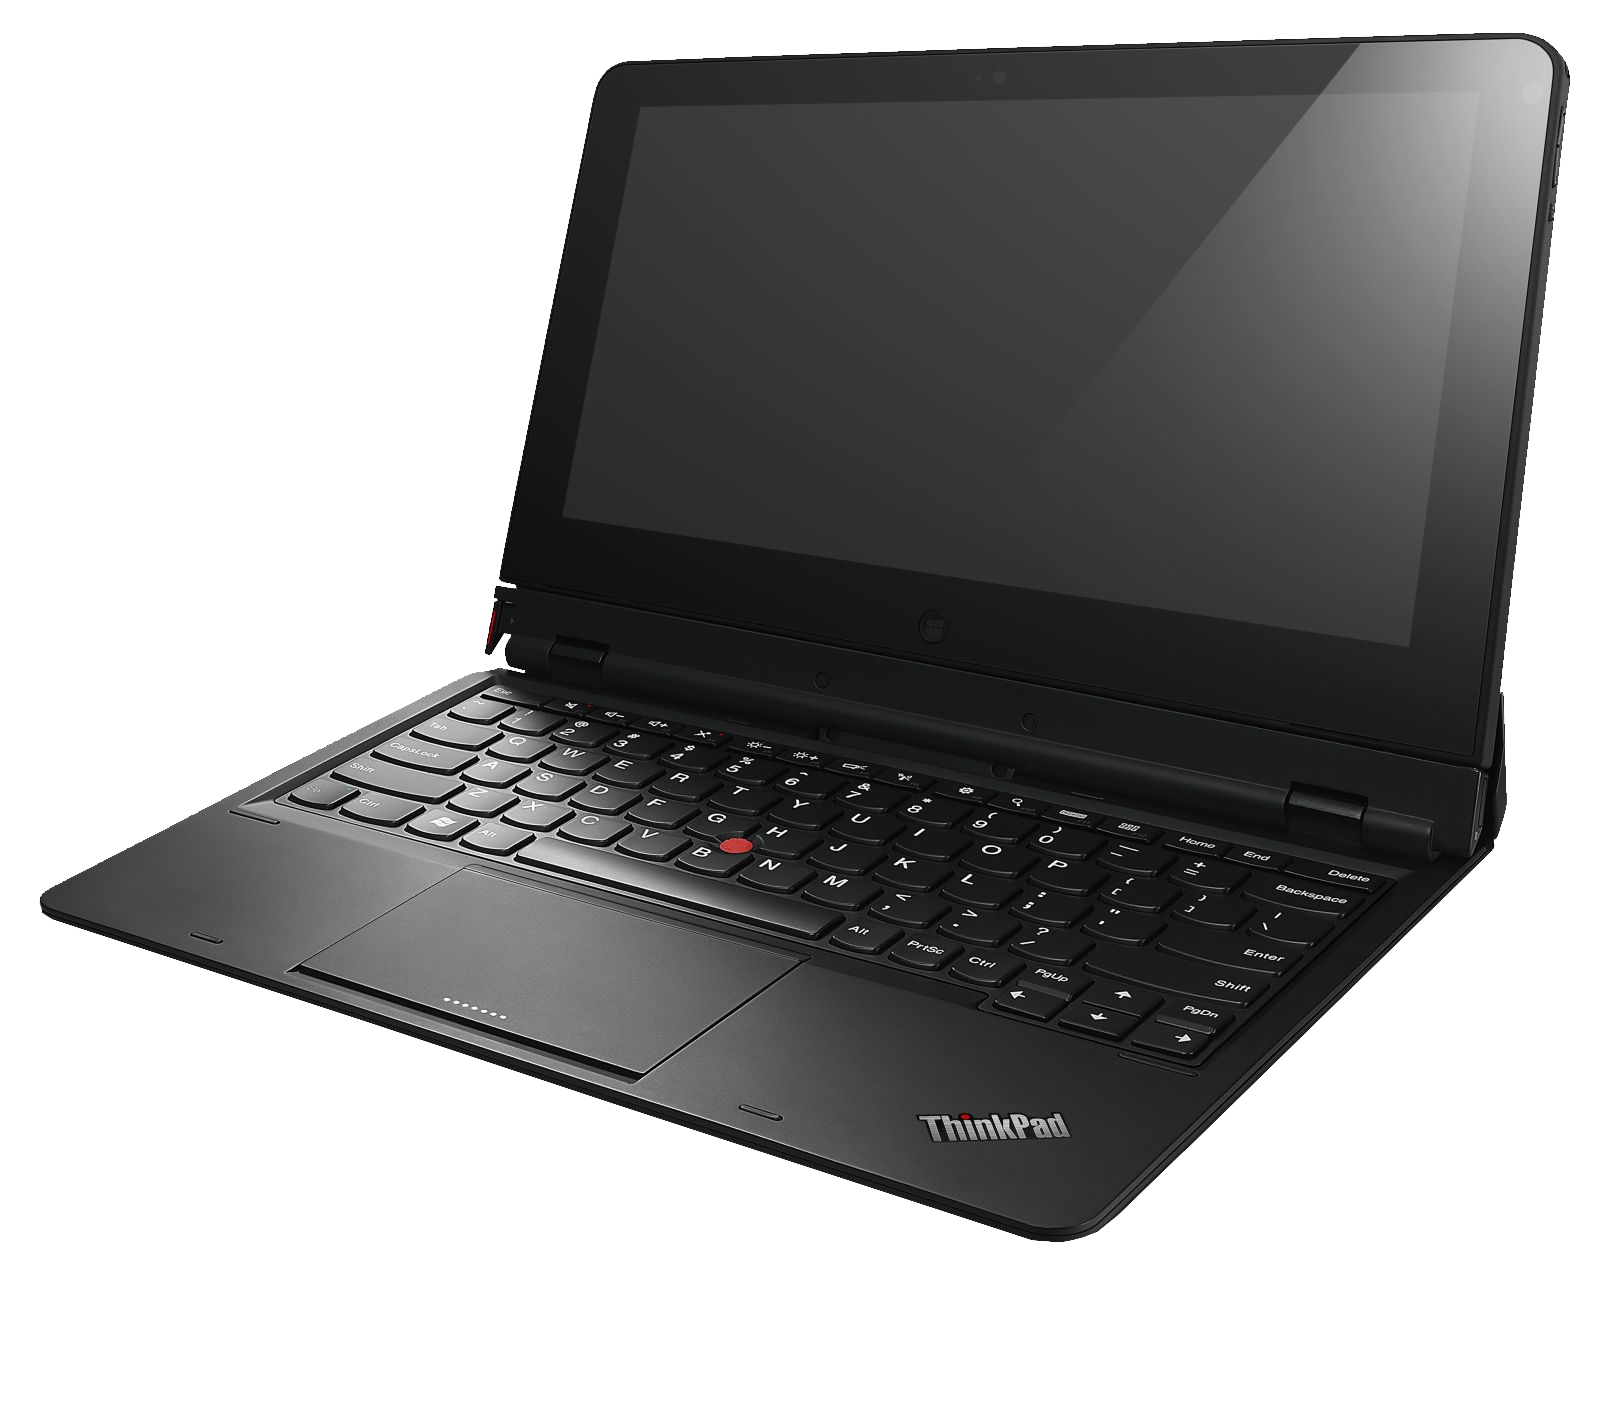 Specs Lenovo ThinkPad Helix i7-3667U Notebook 29.5 cm (11.6 